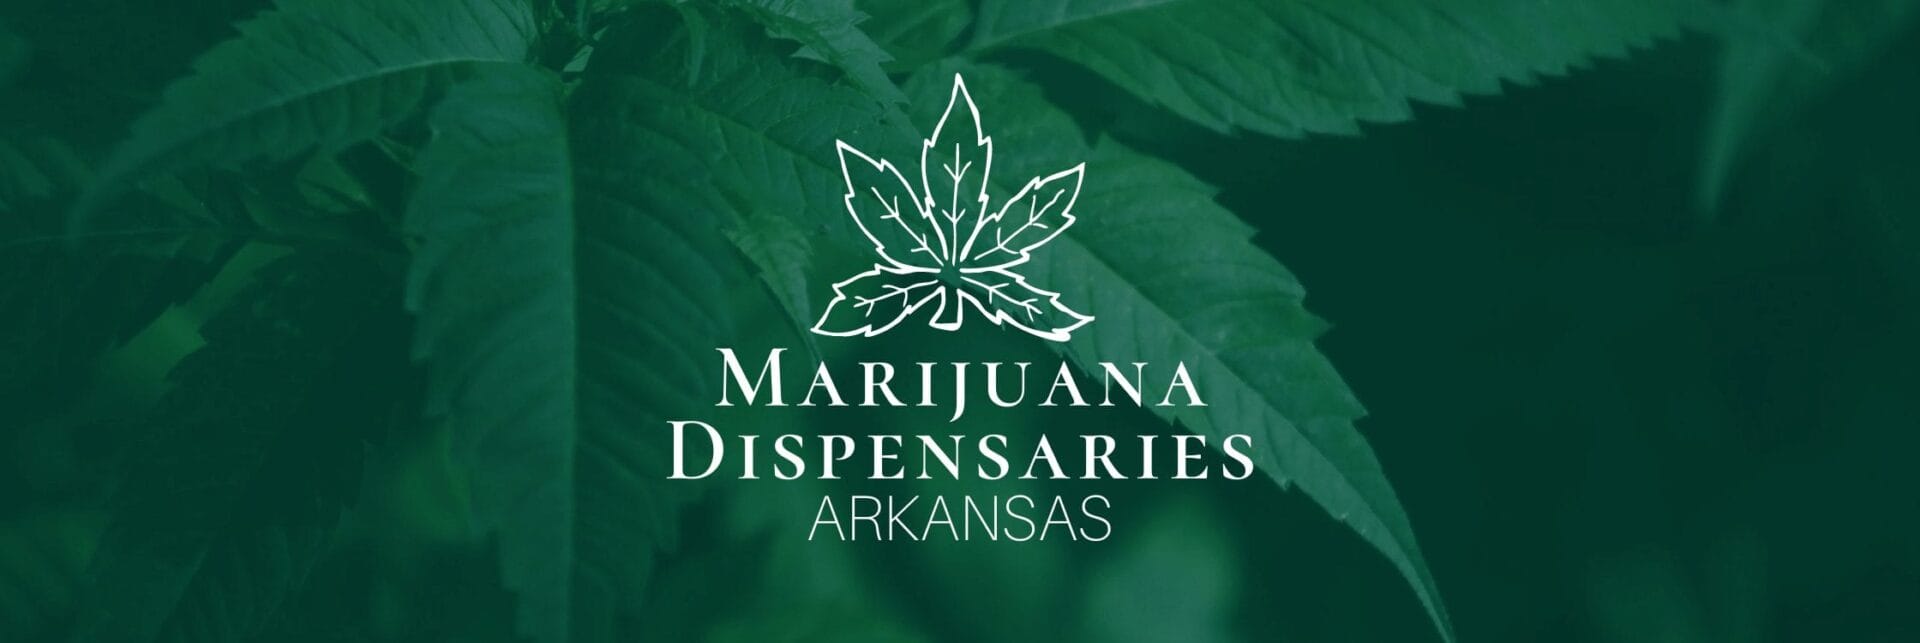 Marijuana Dispensaries in Arkansas